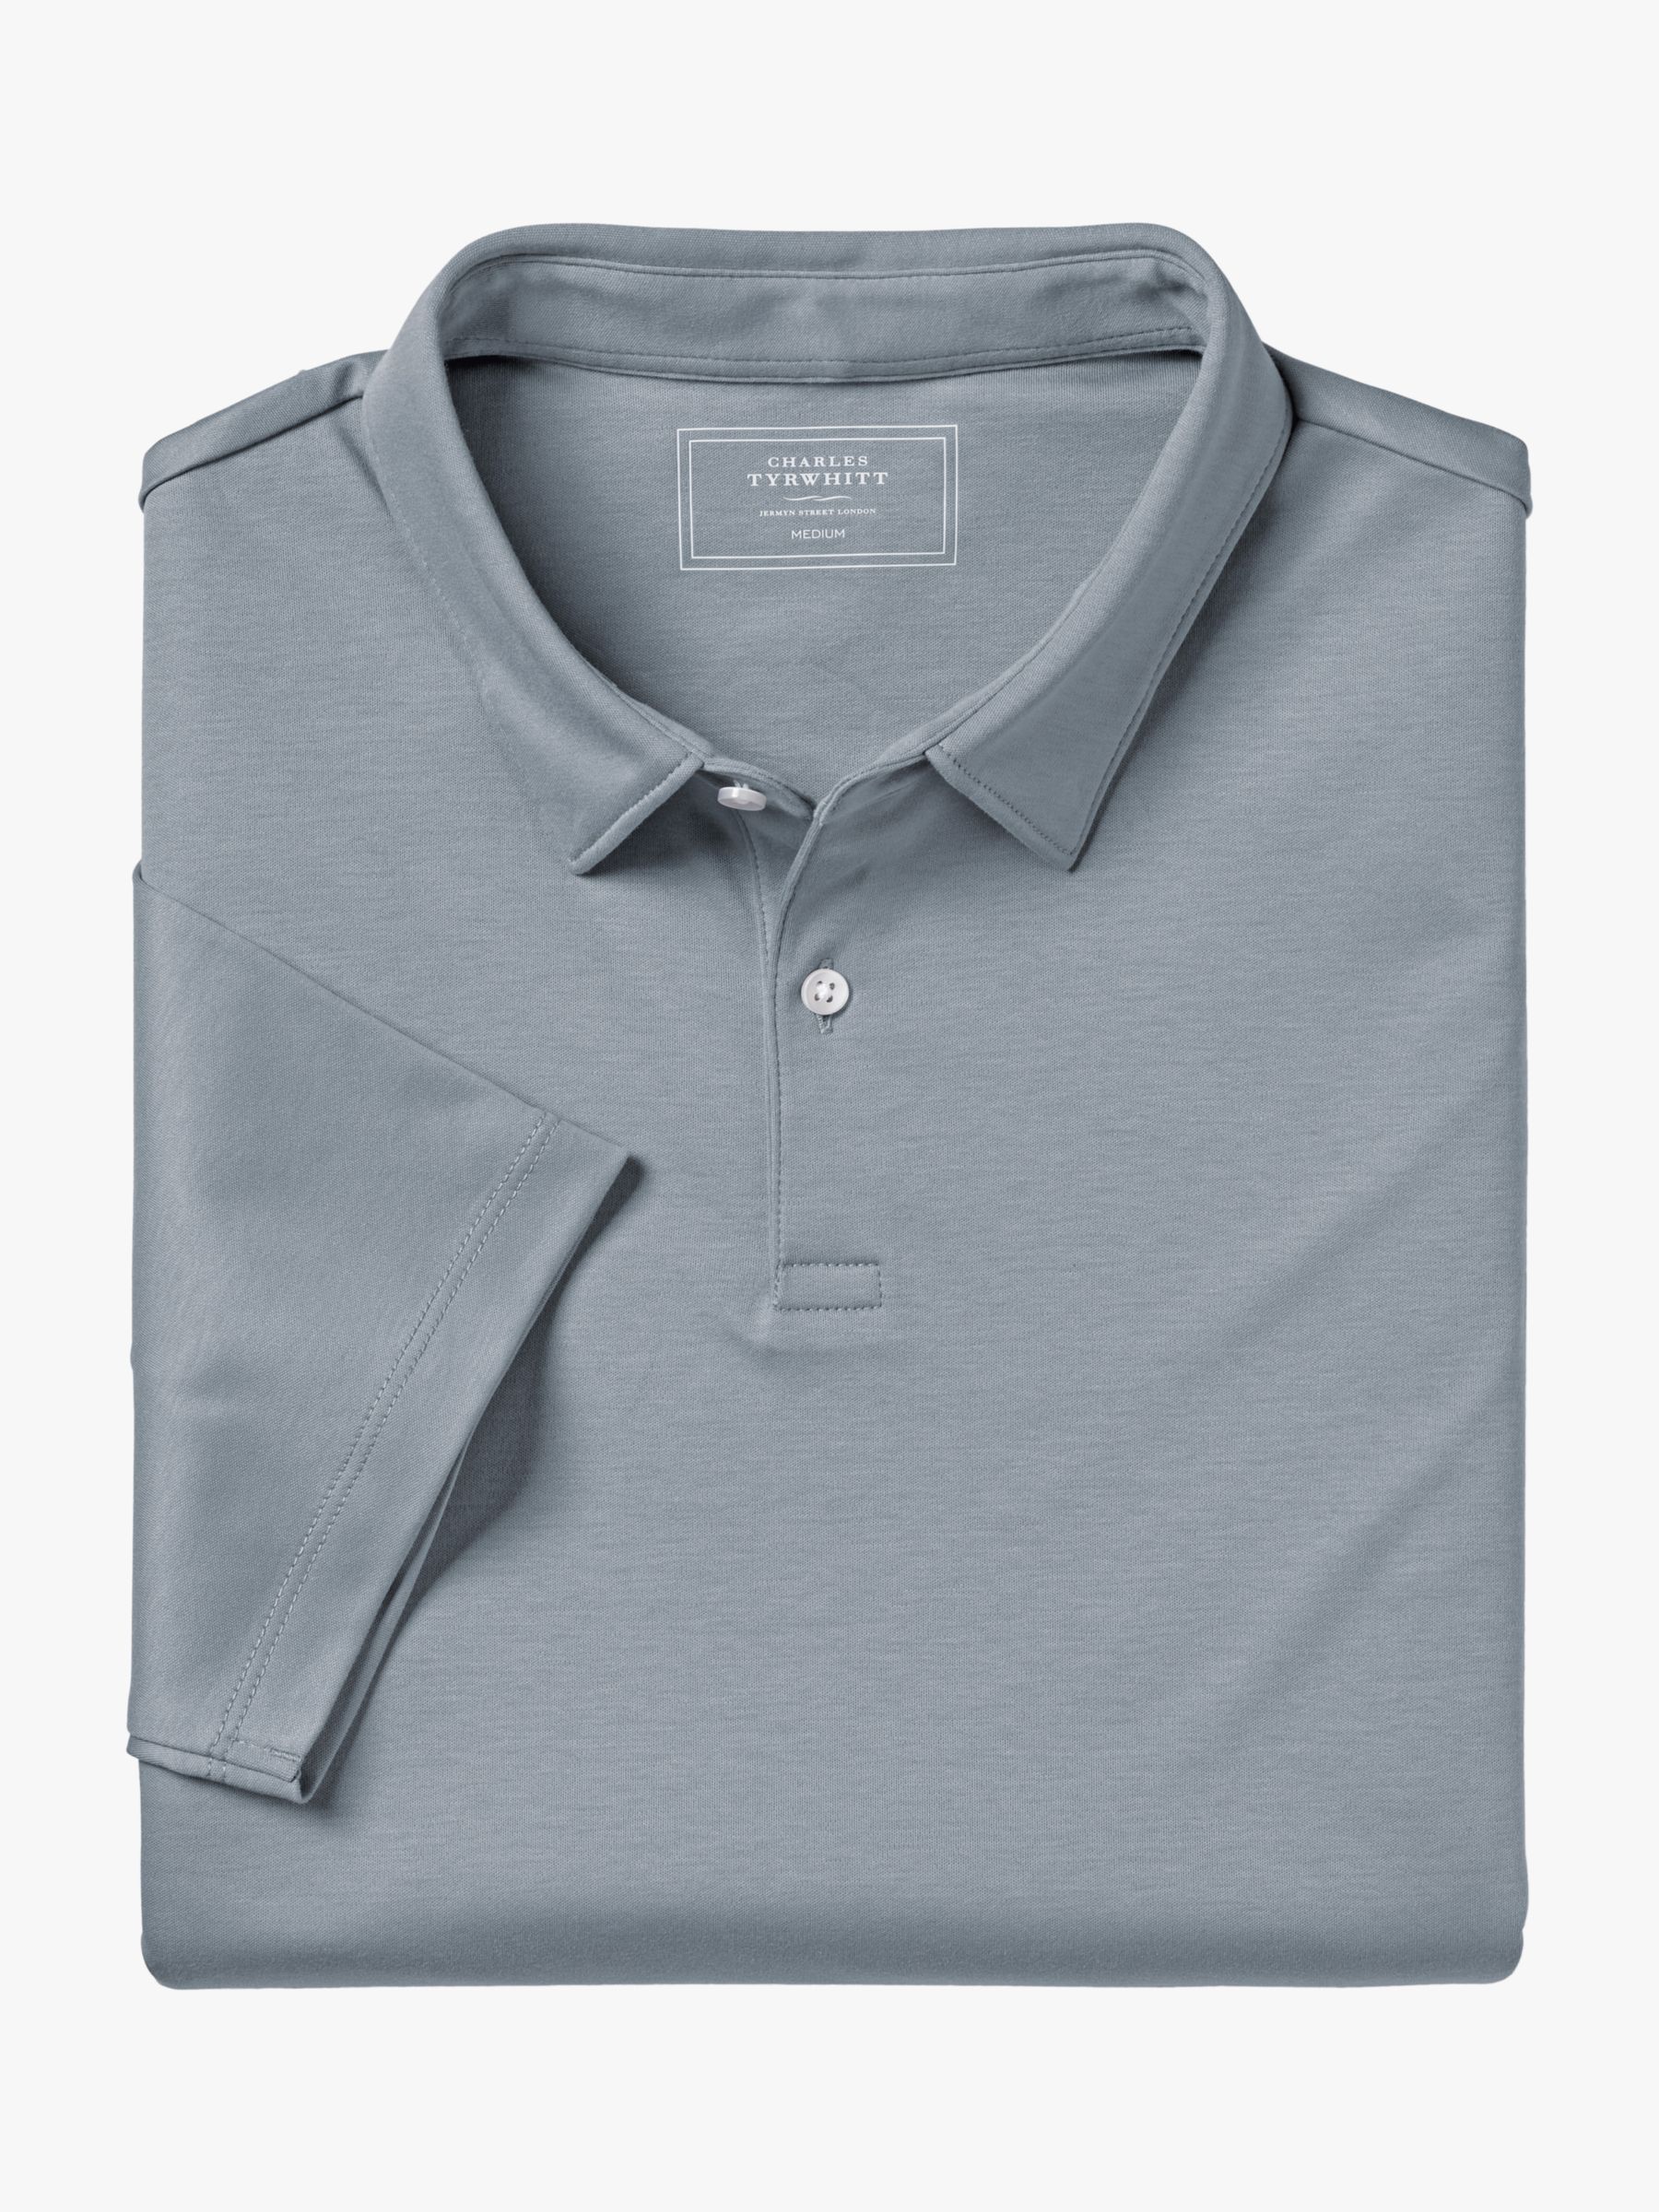 Charles Tyrwhitt Smart Jersey Short Sleeve Polo, Silver Grey, S